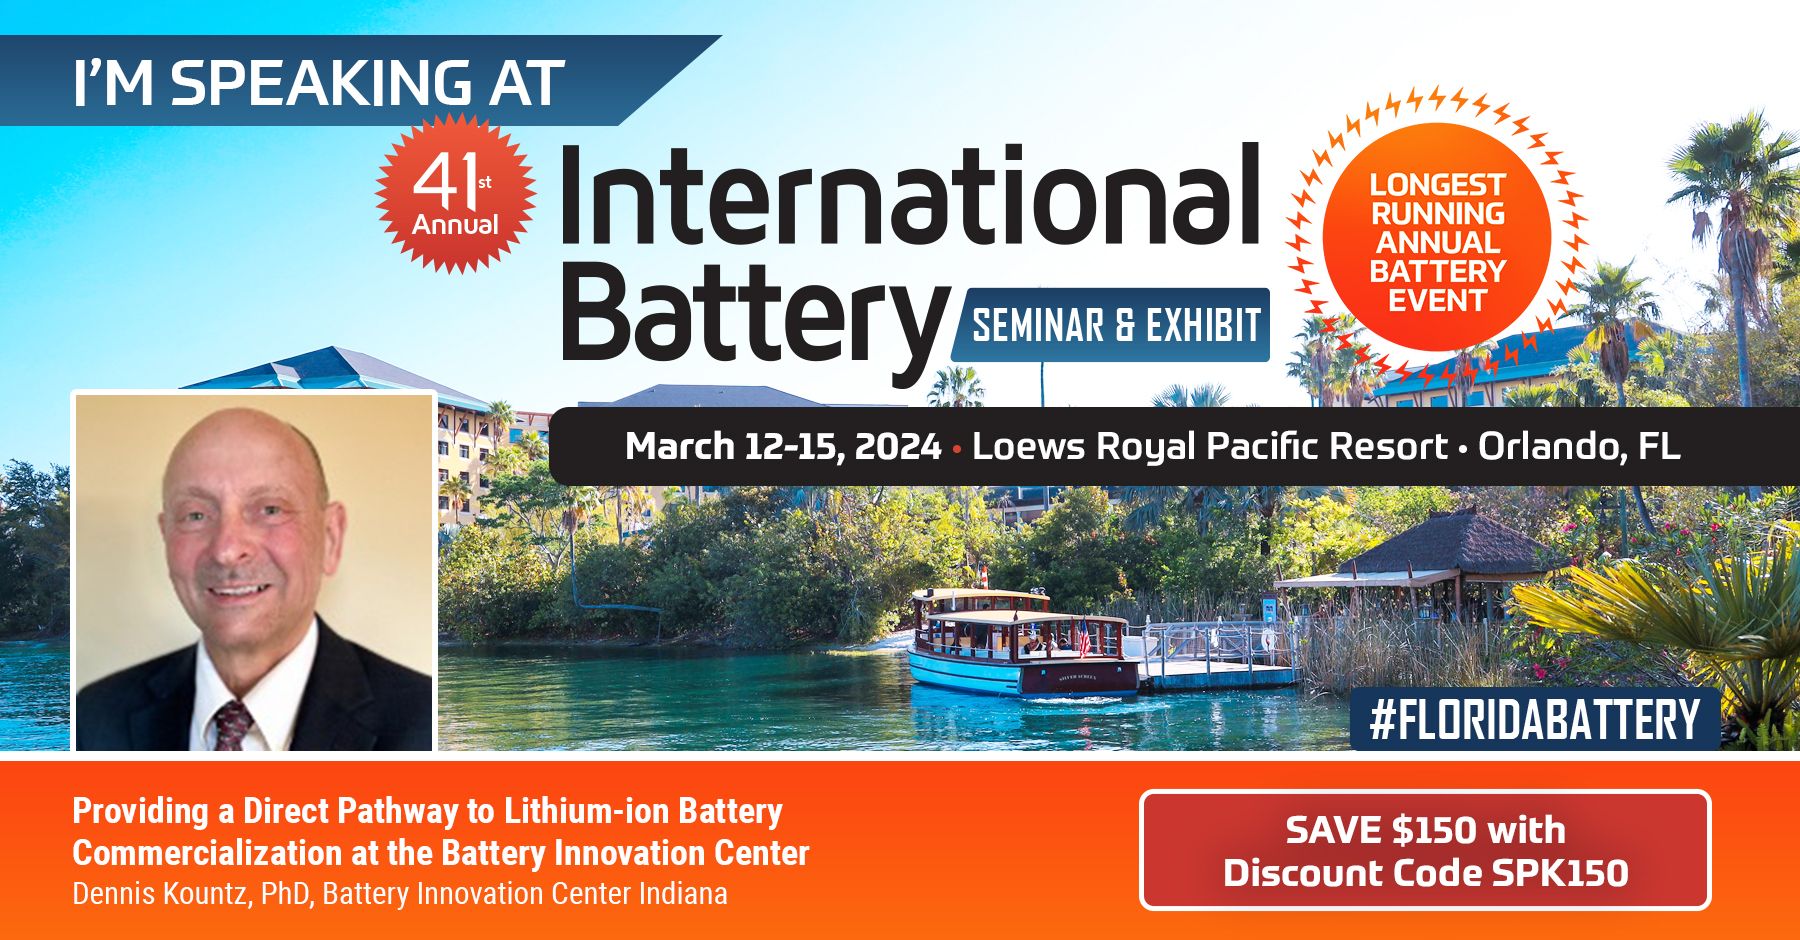 International Battery Seminar & Exhibit